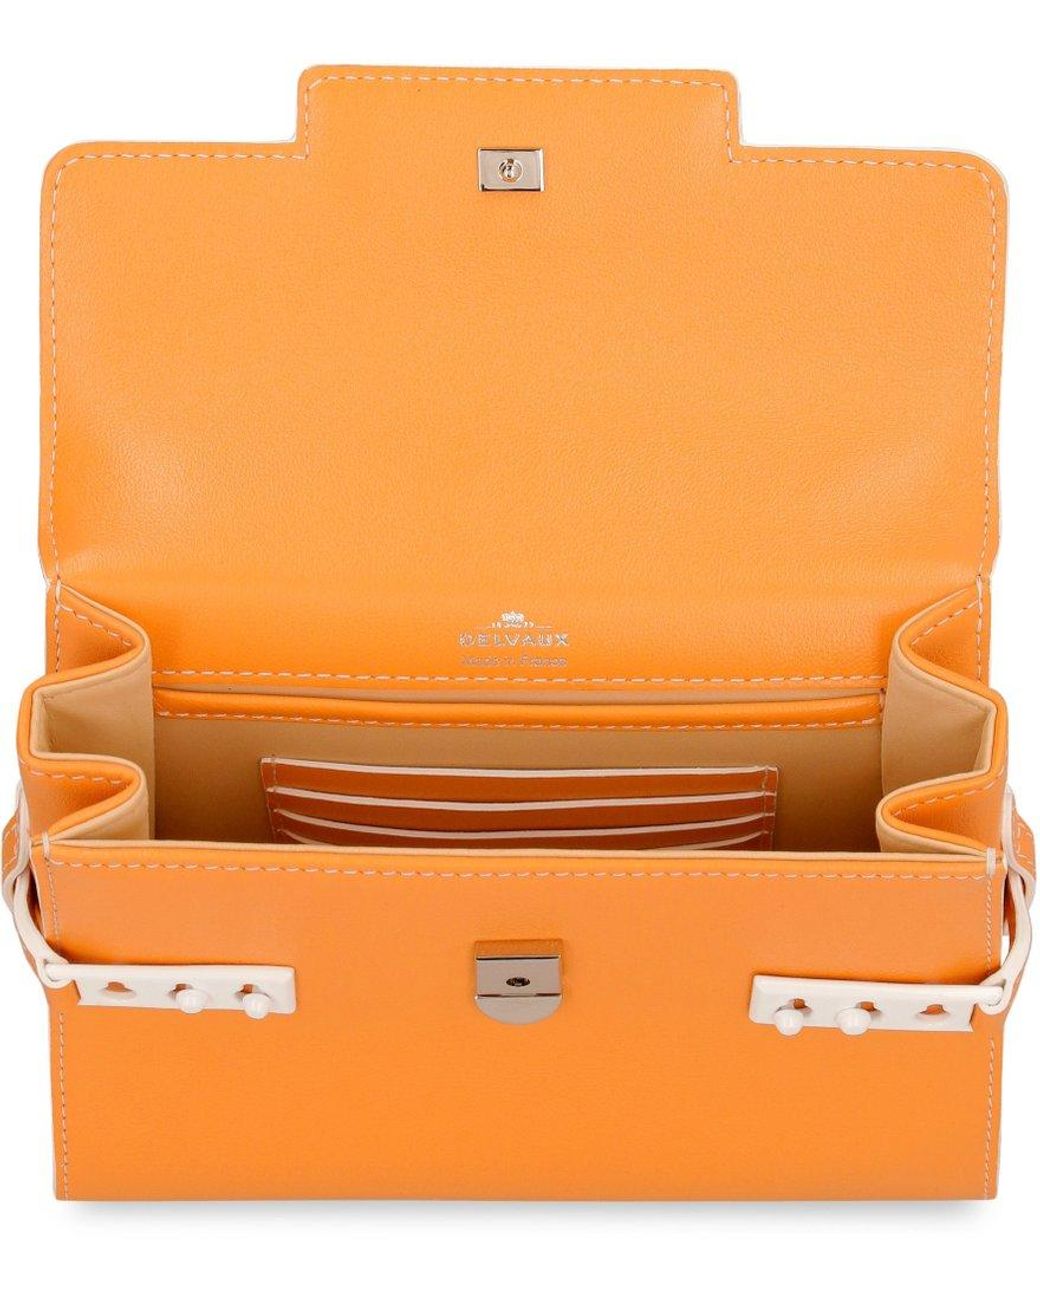 Delvaux Tempête Small Tote Bag in Orange